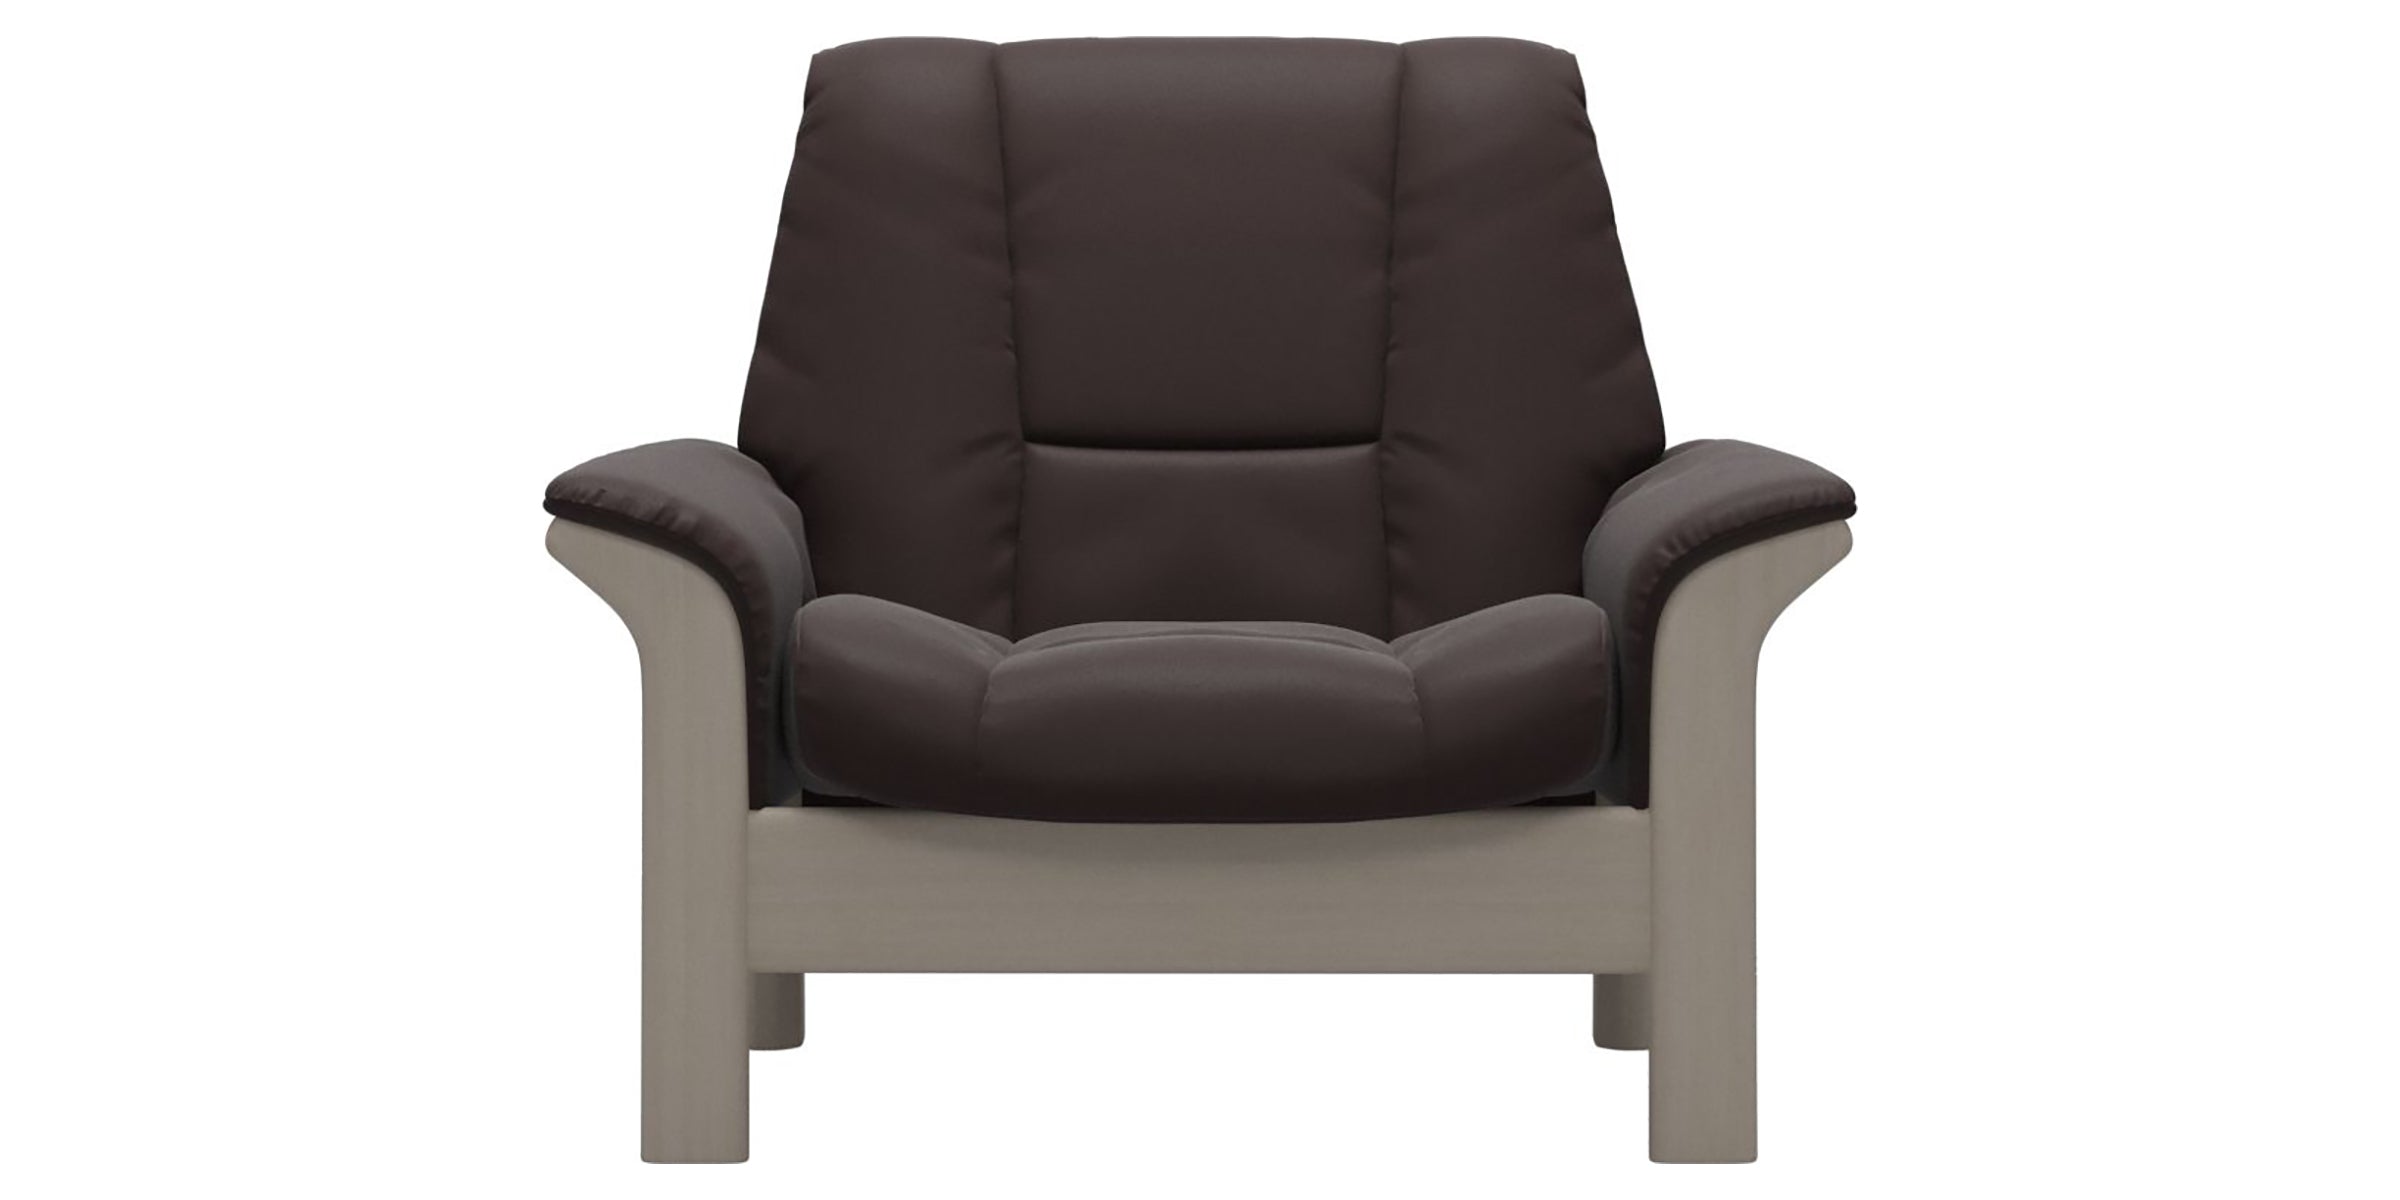 Paloma Leather Chocolate and Whitewash Base | Stressless Buckingham Low Back Chair | Valley Ridge Furniture